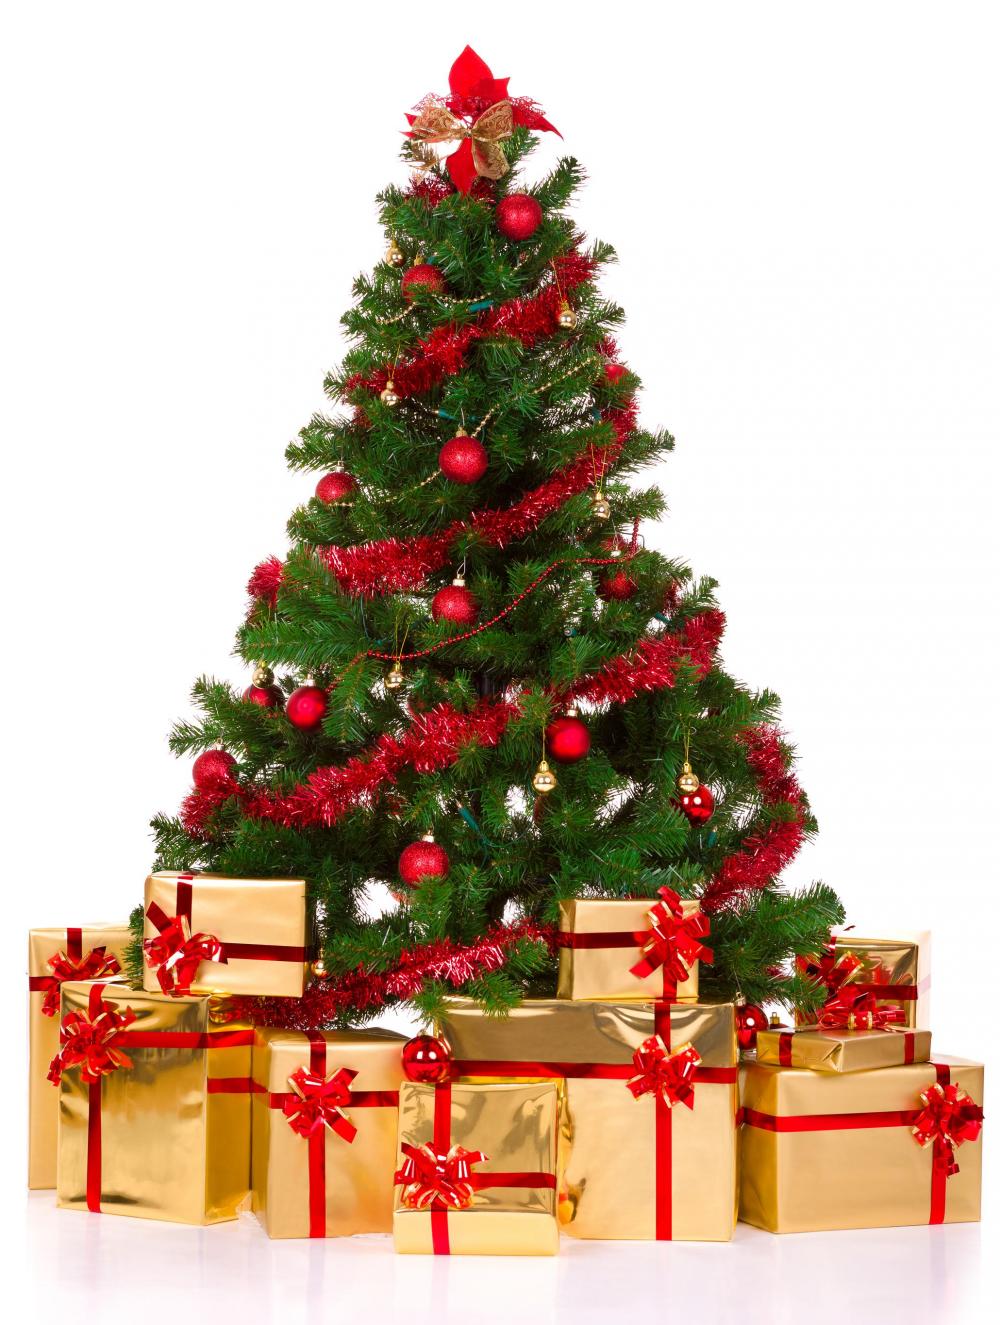 decorated-christmas-tree